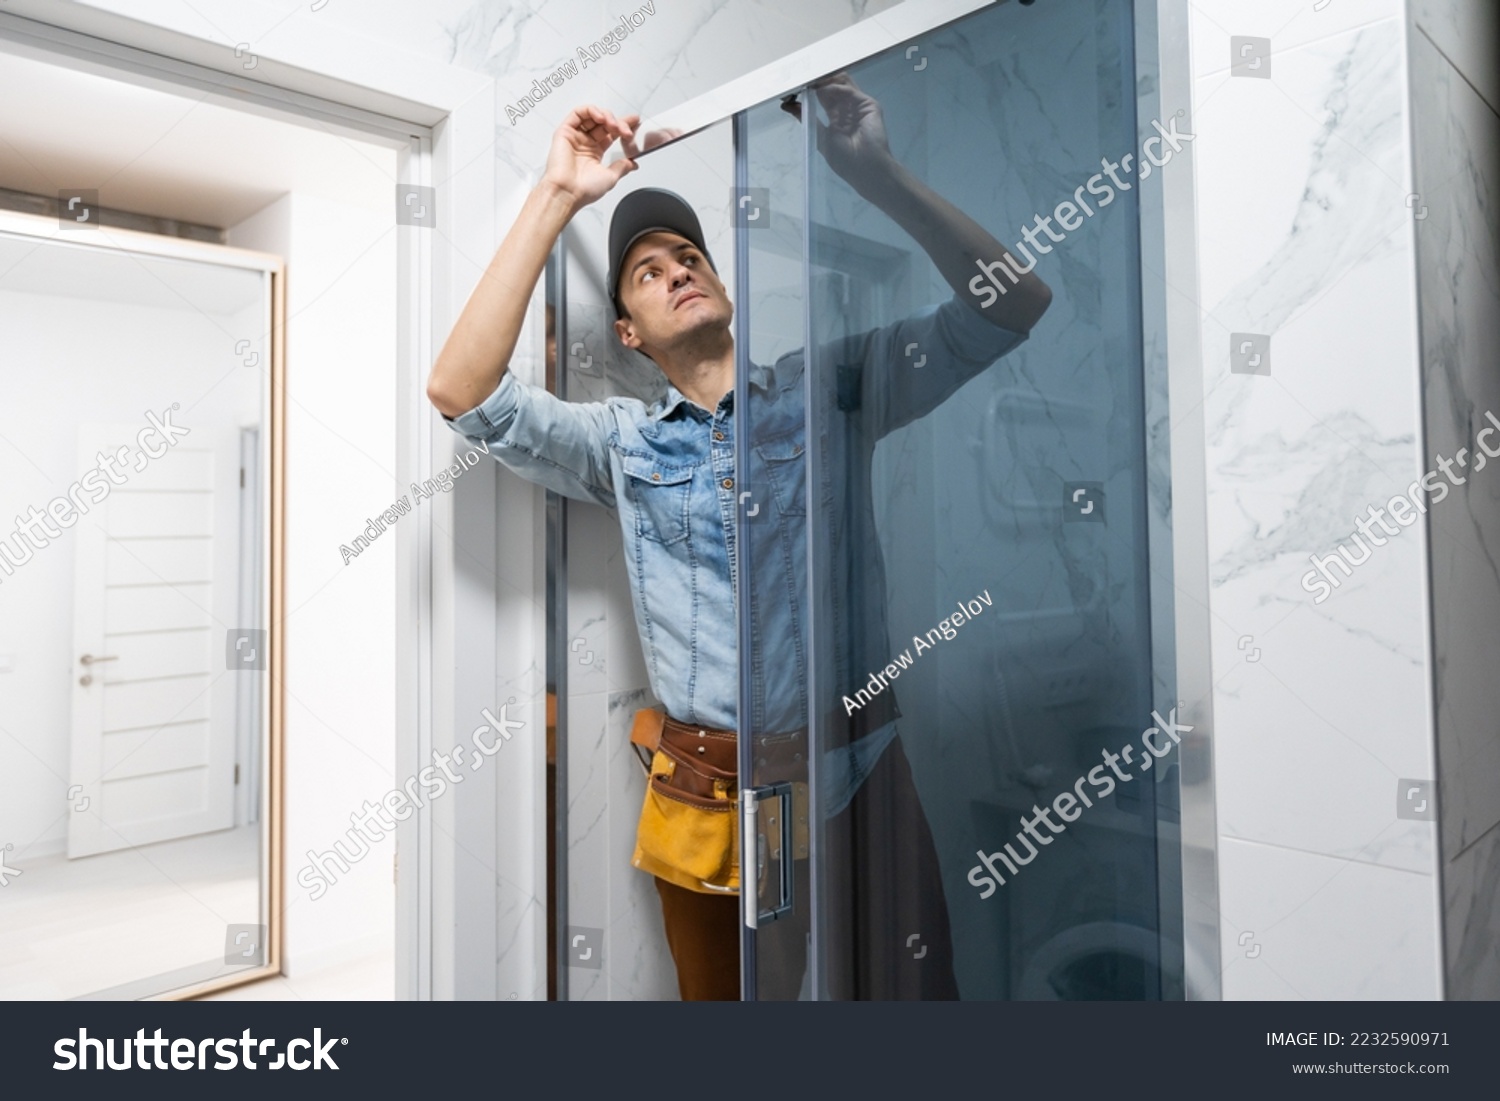 Handyman installing glass cabinet in bathroom. #2232590971